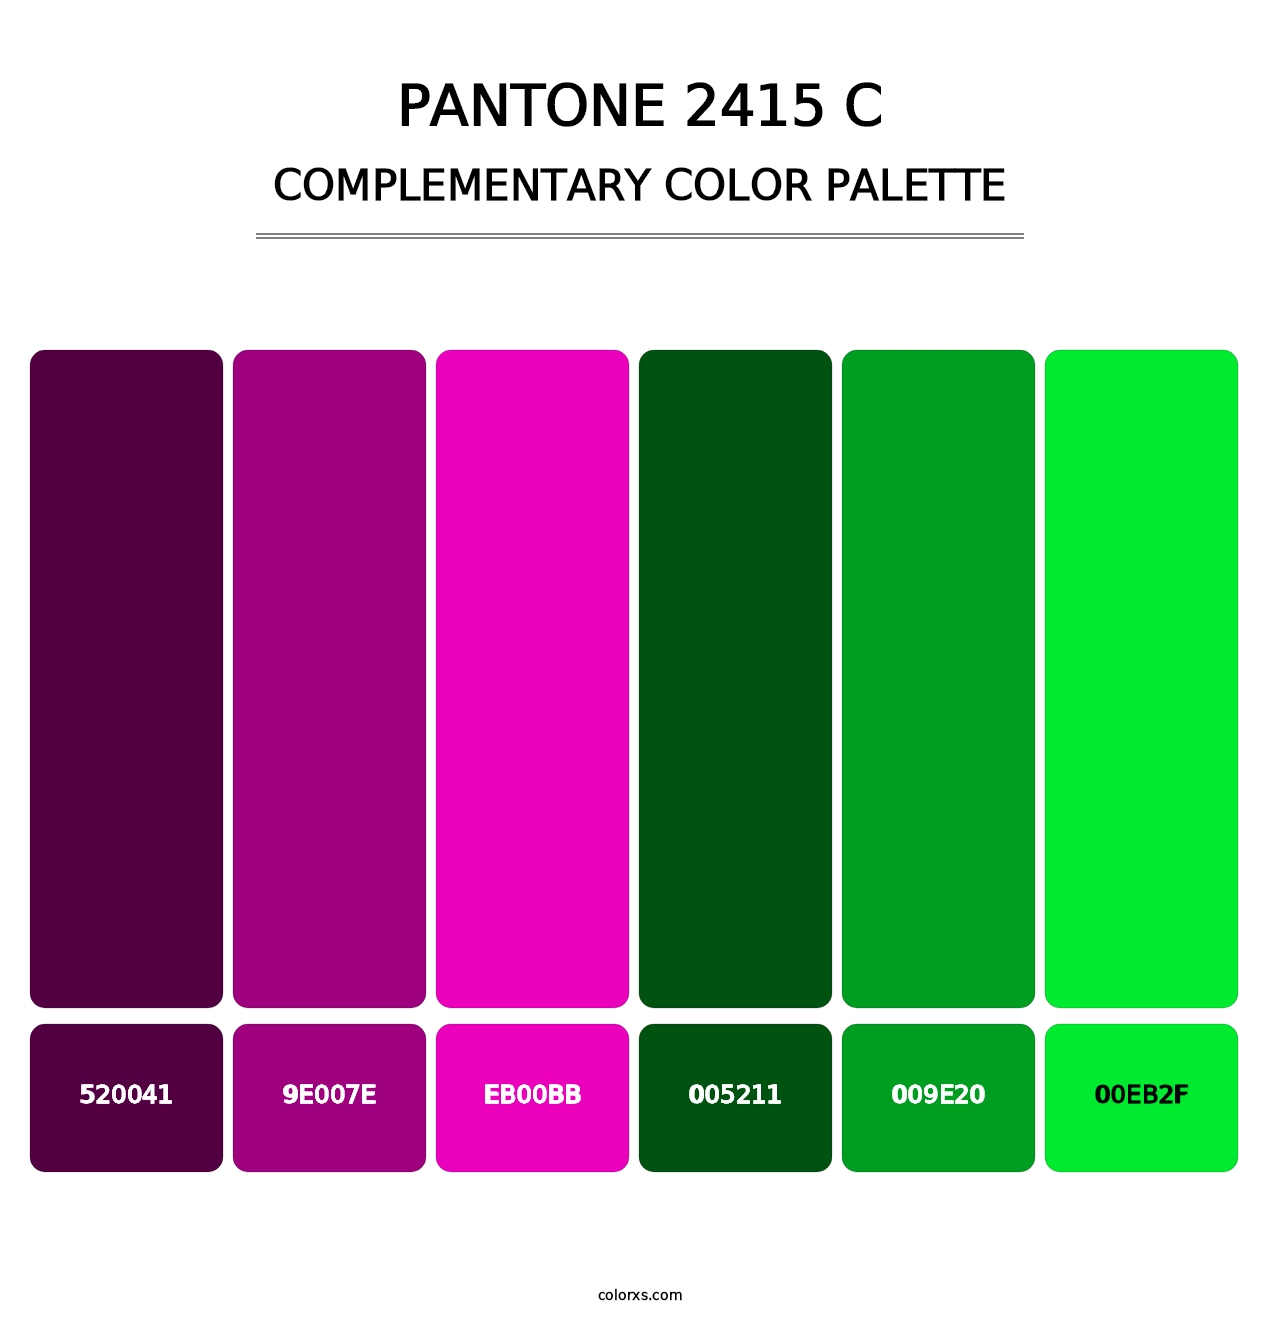 PANTONE 2415 C - Complementary Color Palette